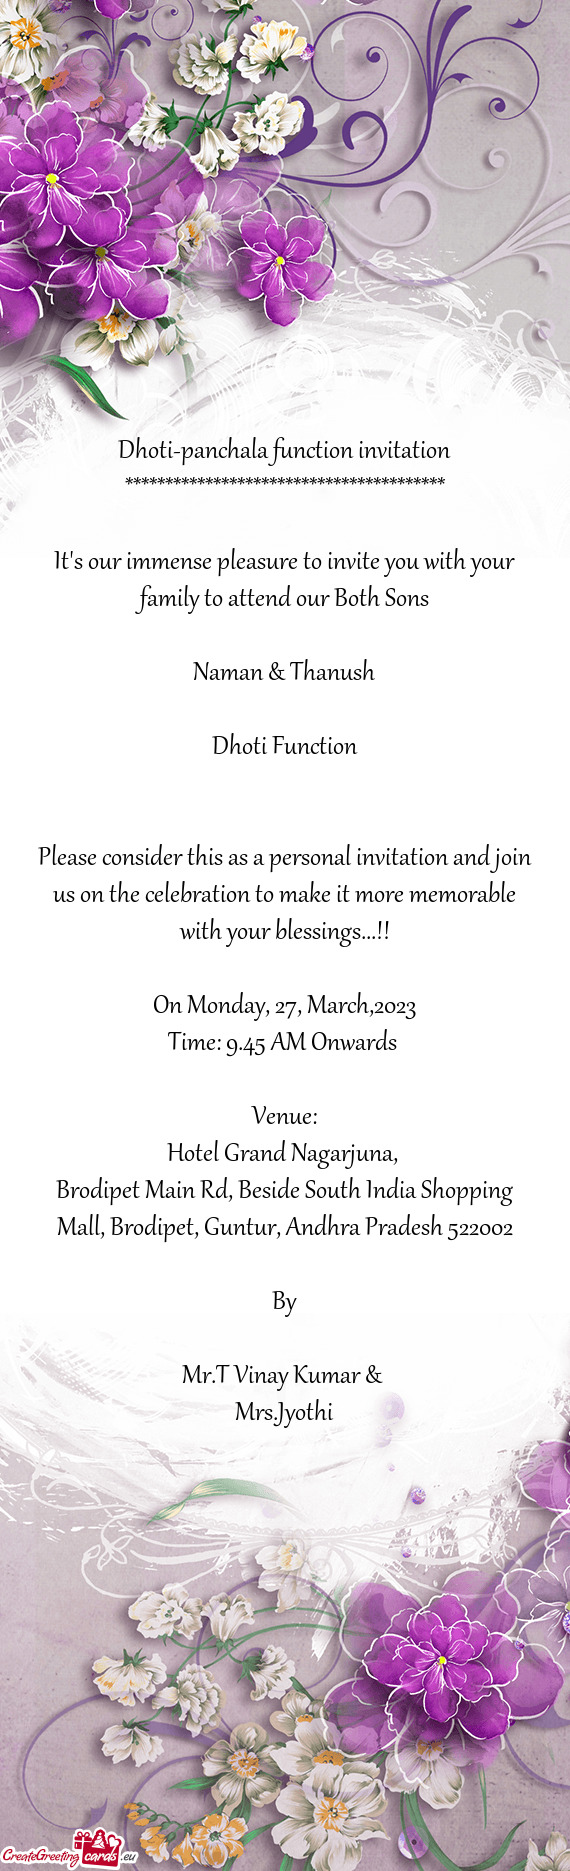 Dhoti-panchala function invitation